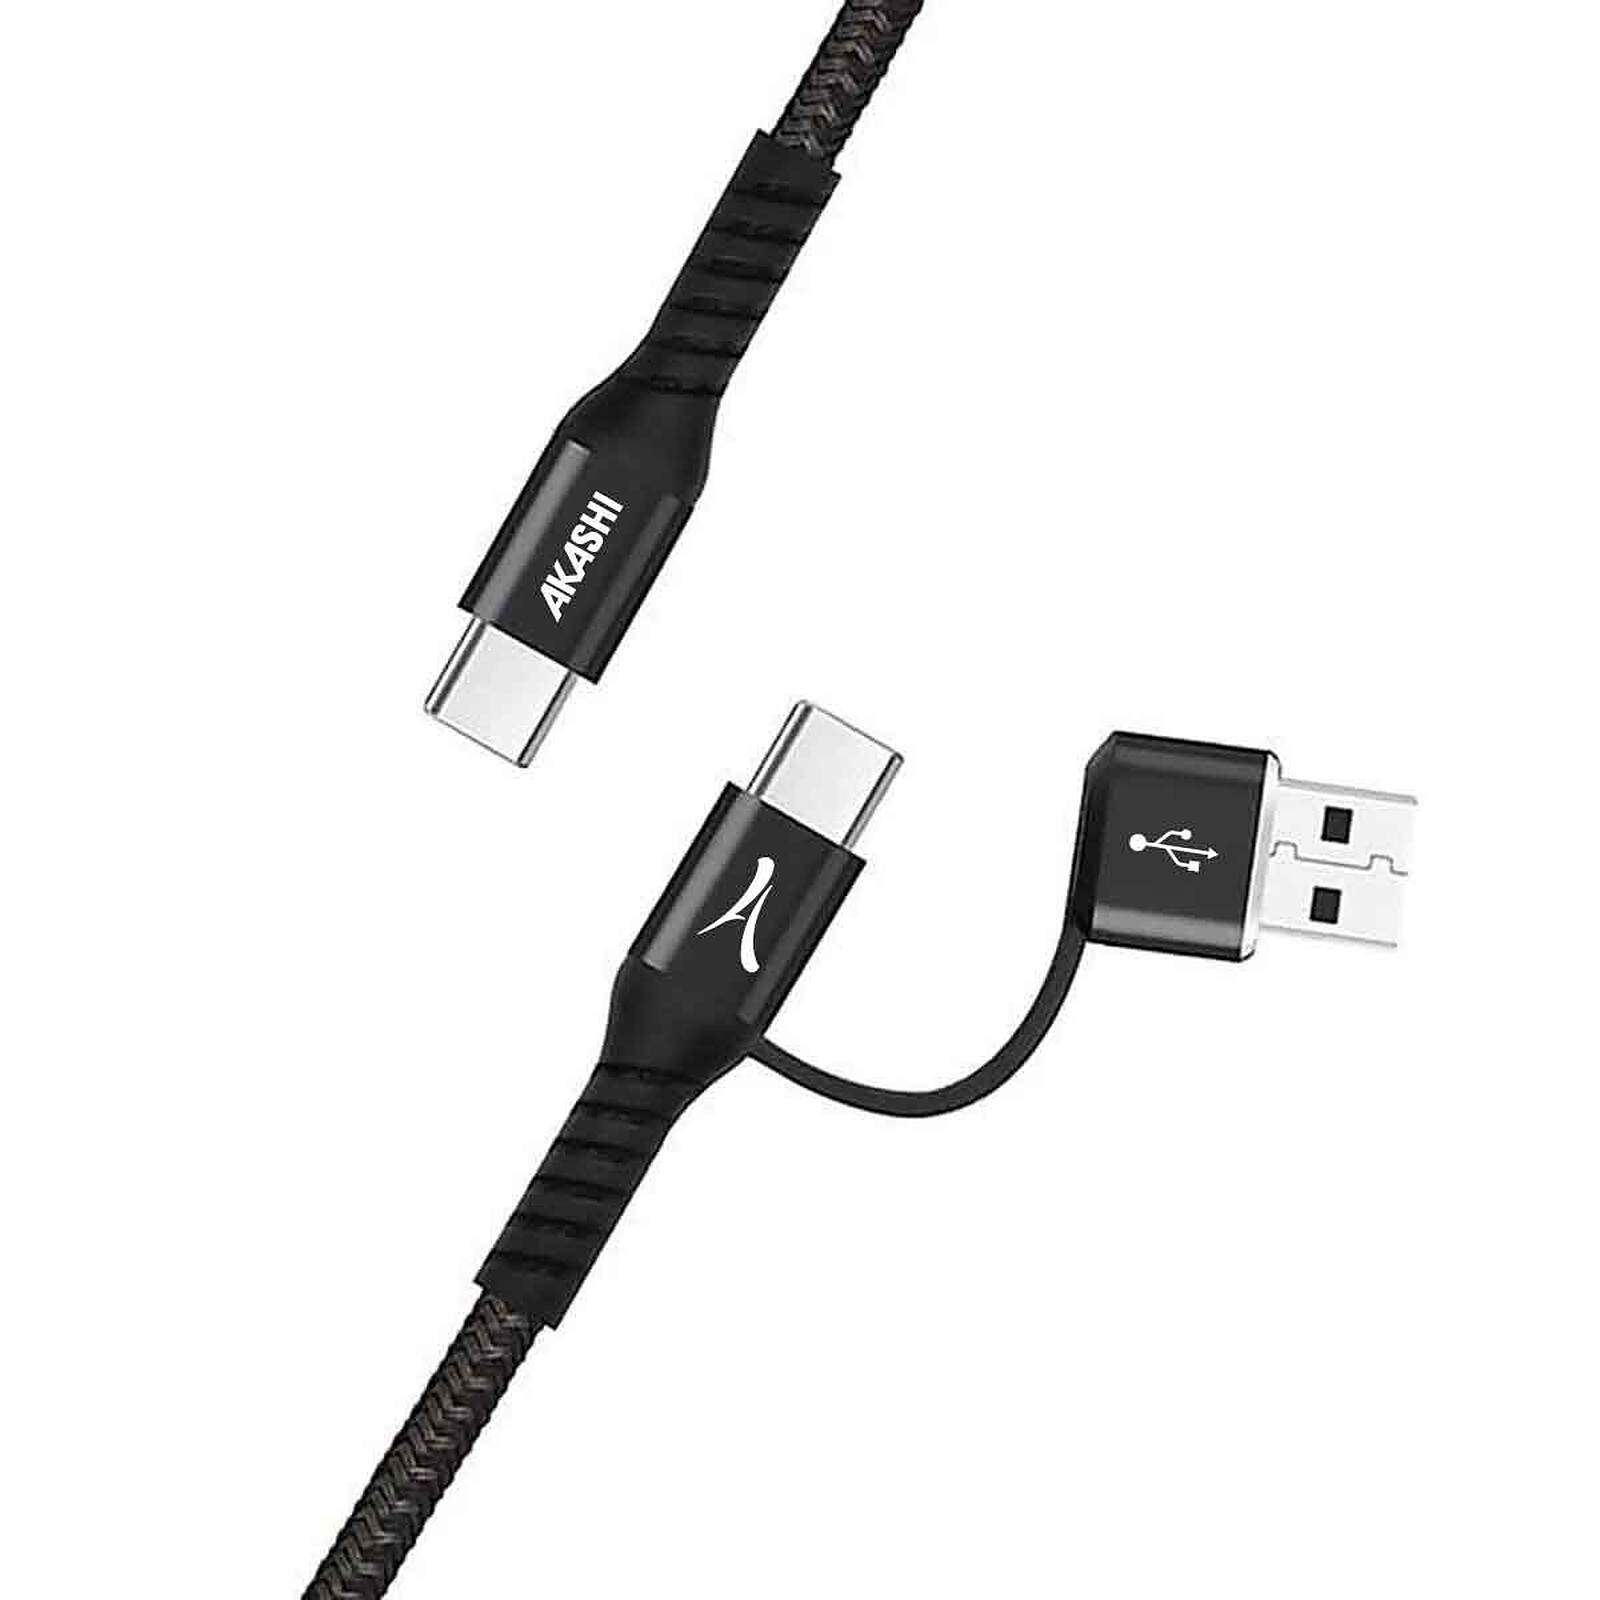 Câble USB-C vers USB-A 3.0 - Achat, guide & conseil - LDLC